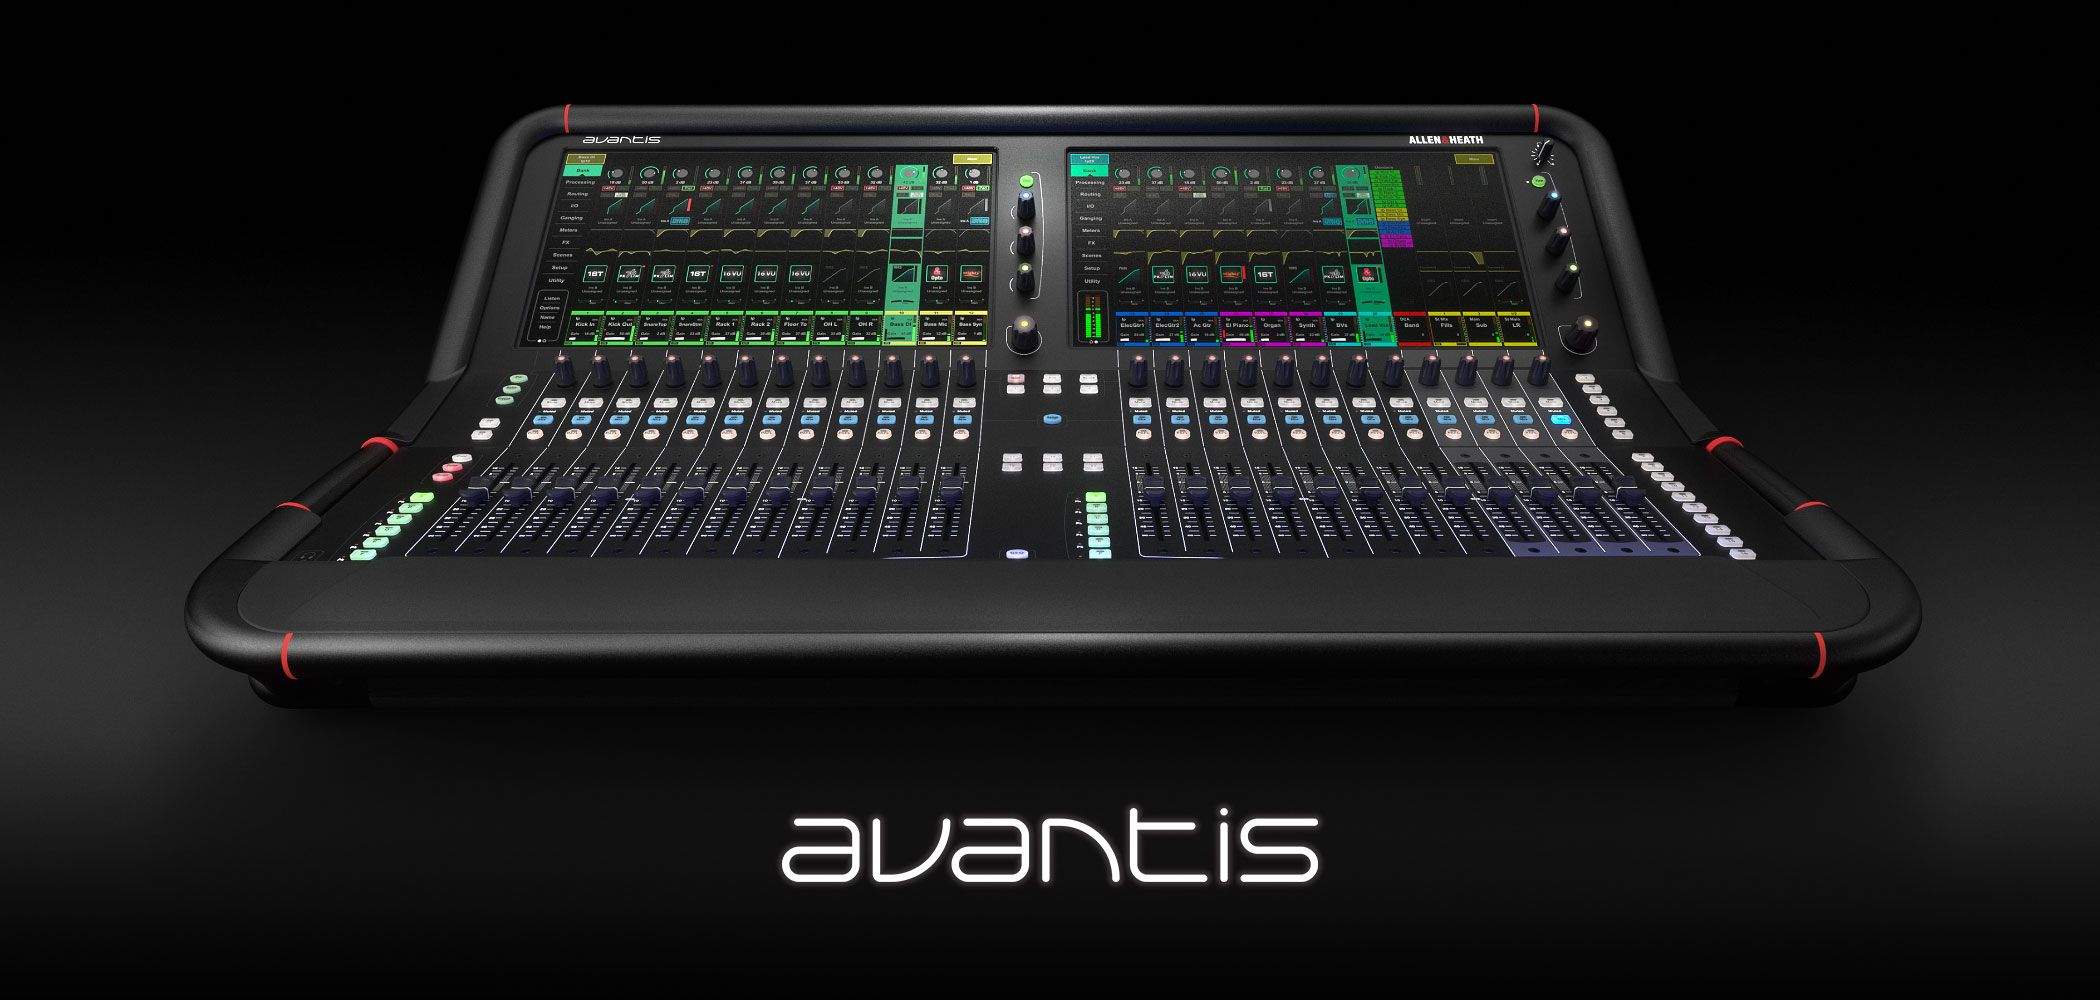 Audio-Technica Ltd